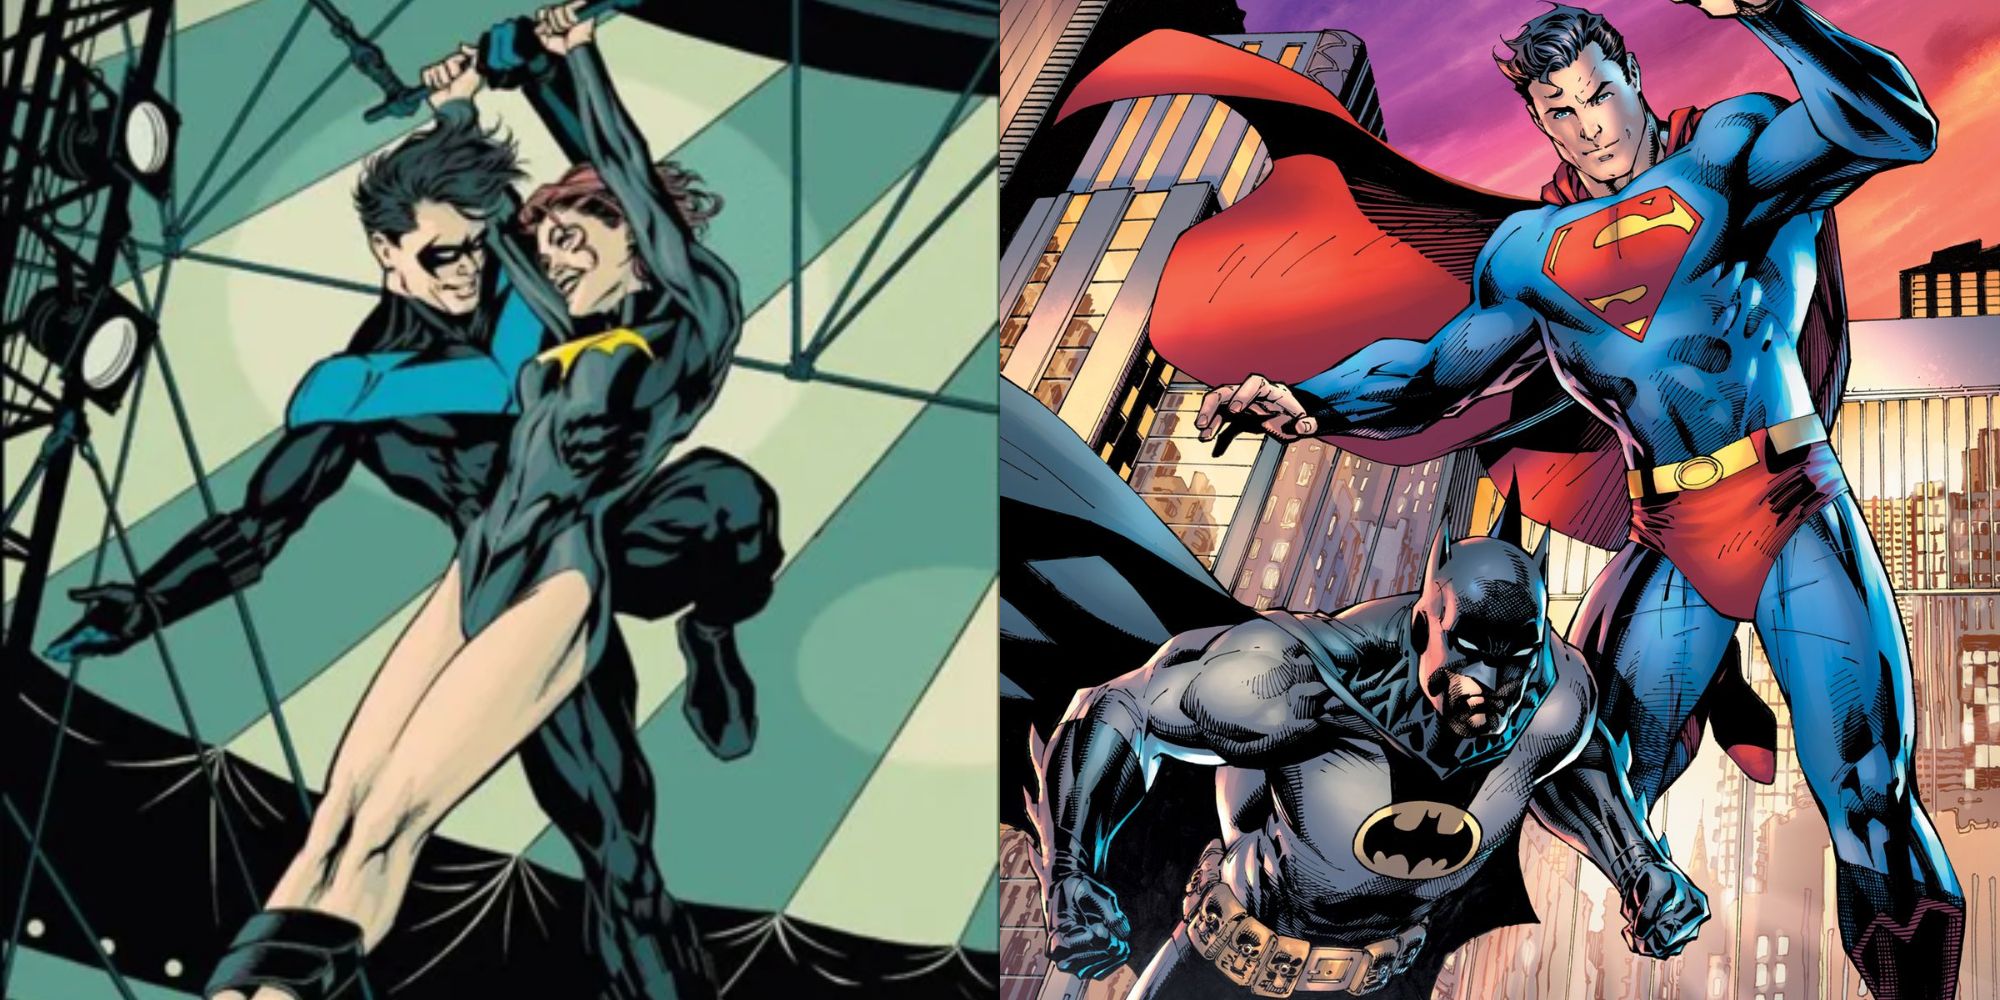 Split image showing Nightwing & Batgirl and Batman & Superman in DC Comics.